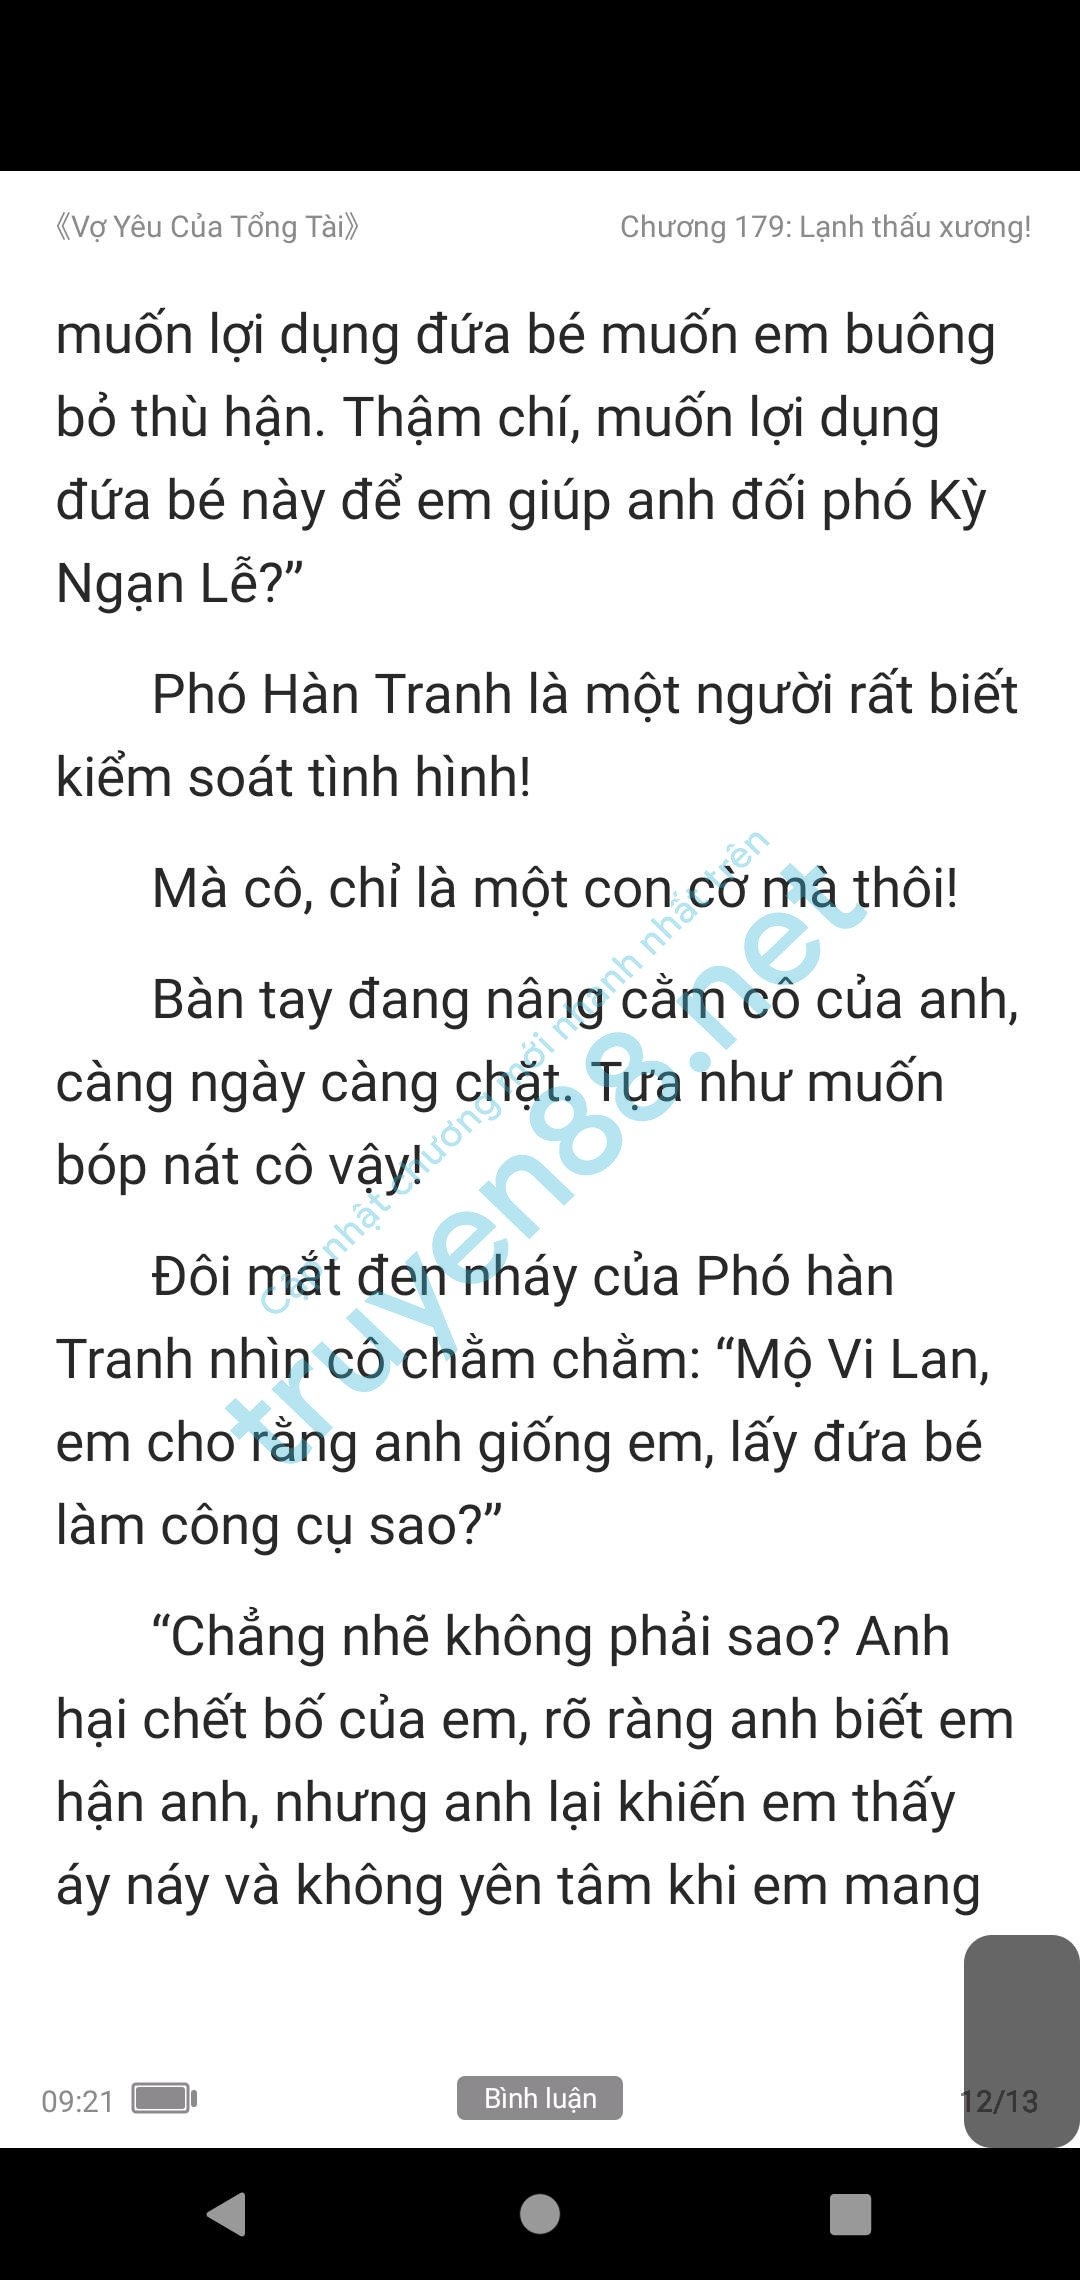 vo-yeu-cua-tong-tai-mo-vi-lan--pho-han-tranh-179-2